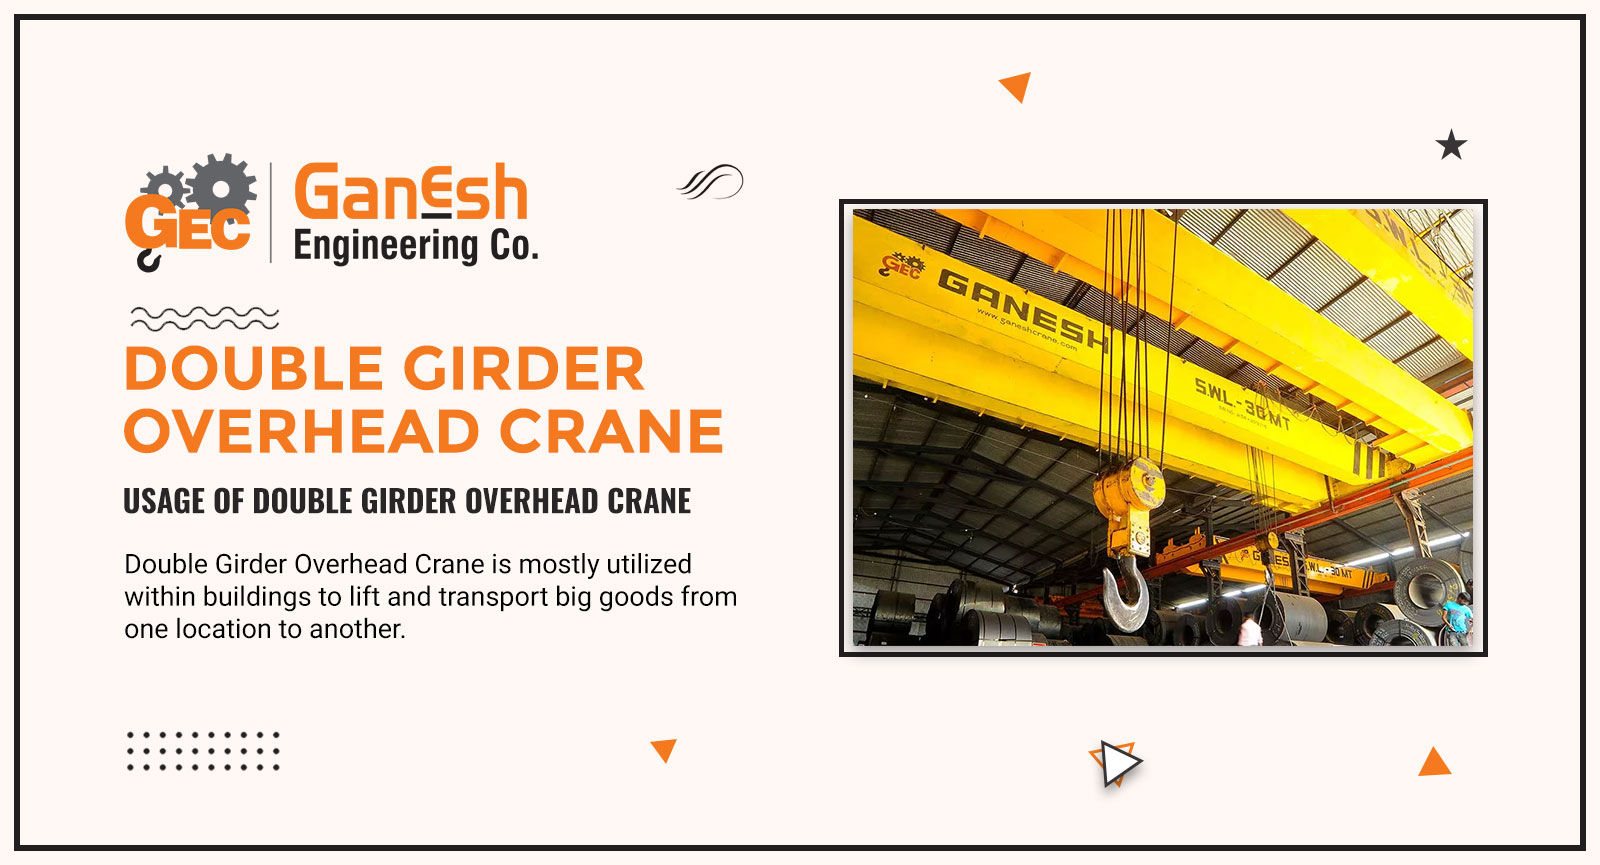 Double Girder Overhead Crane 1, Ganesh Engineering